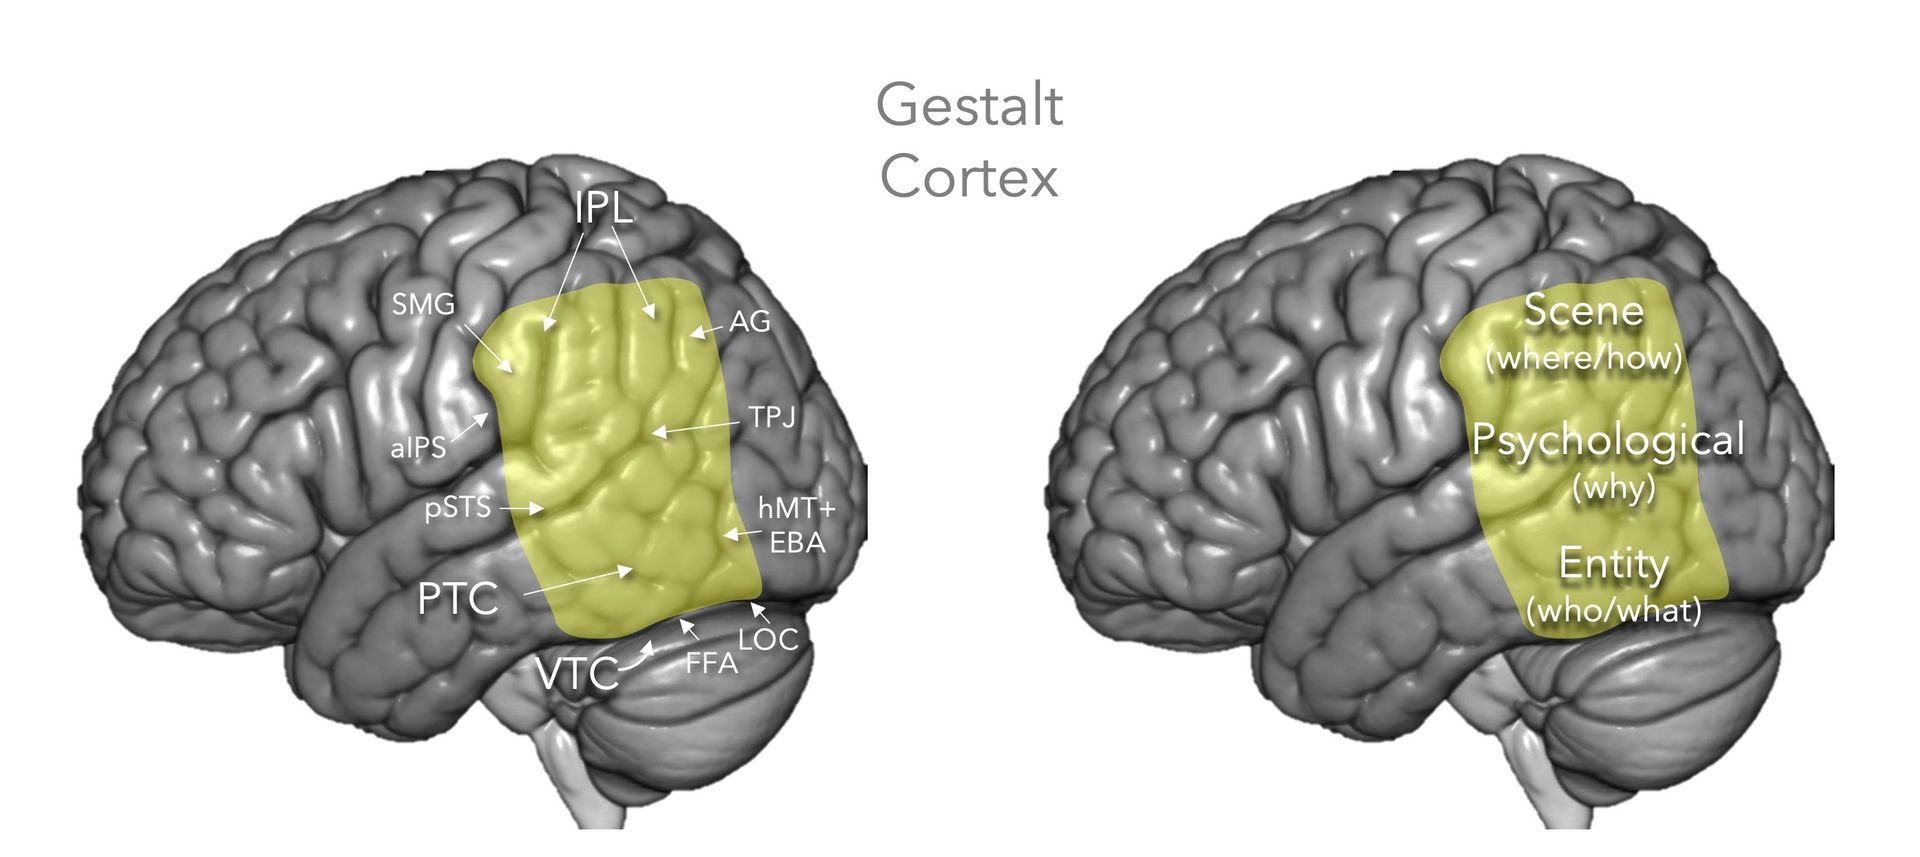 Image of The brain’s “gestalt cortex”